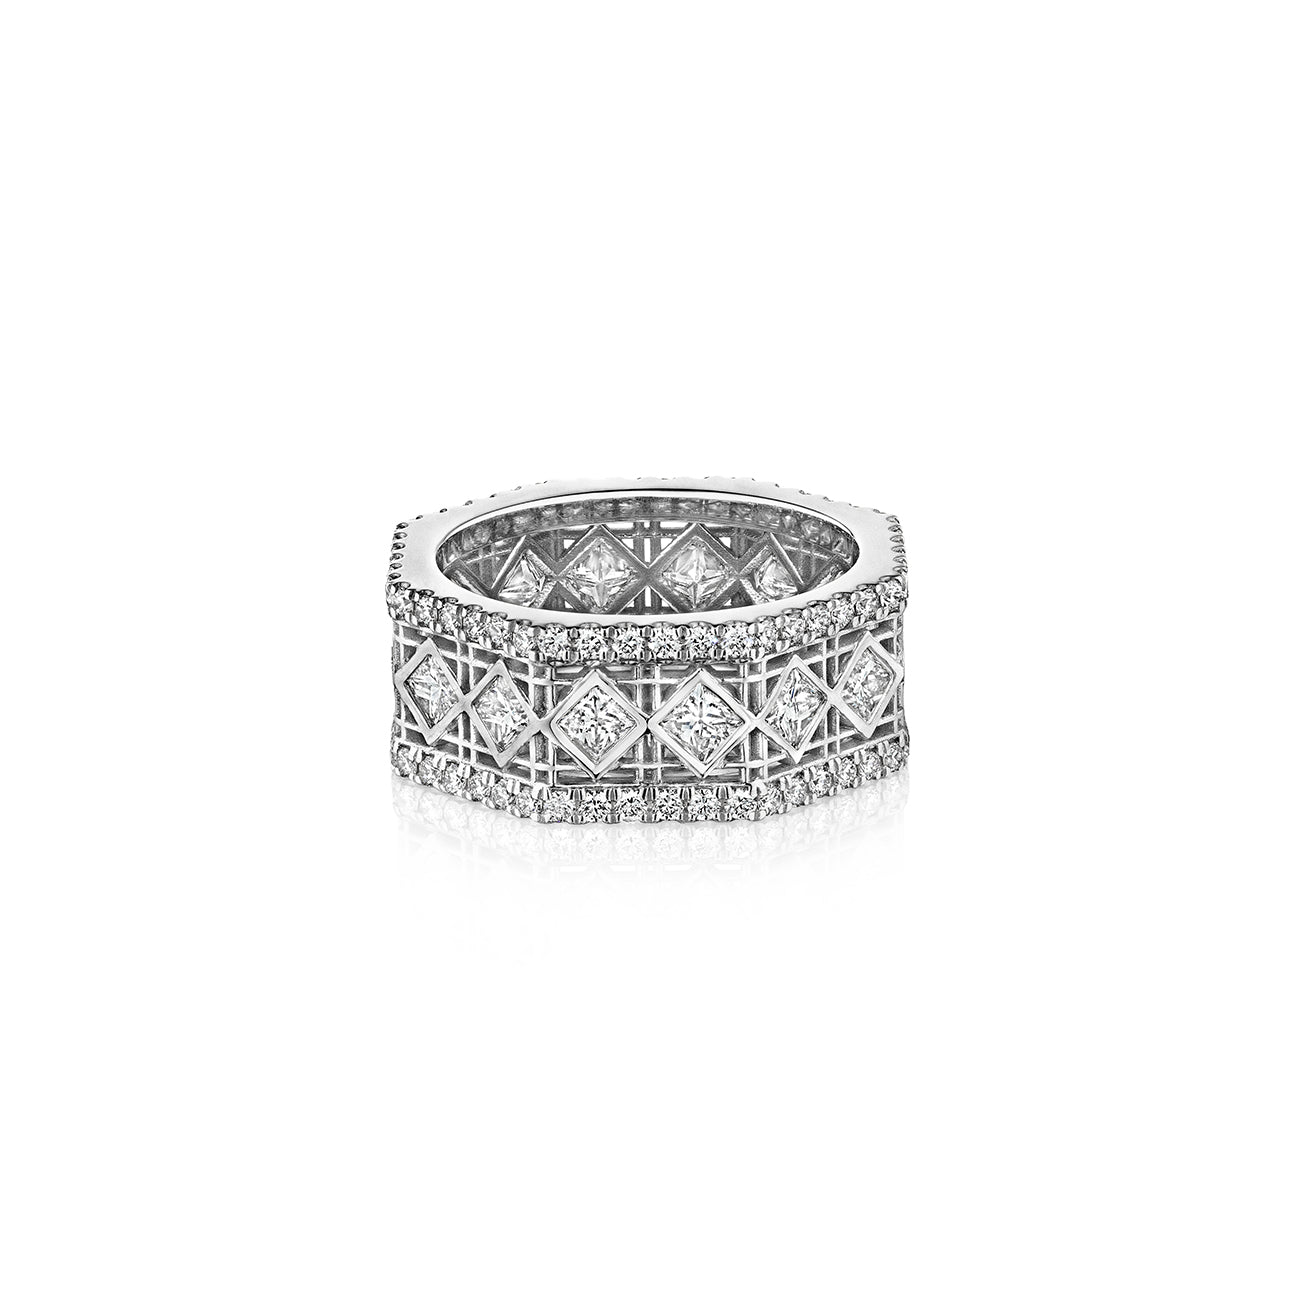 DouDou Band Ring, 18K White Gold, Pavé Diamonds And Princess Cut